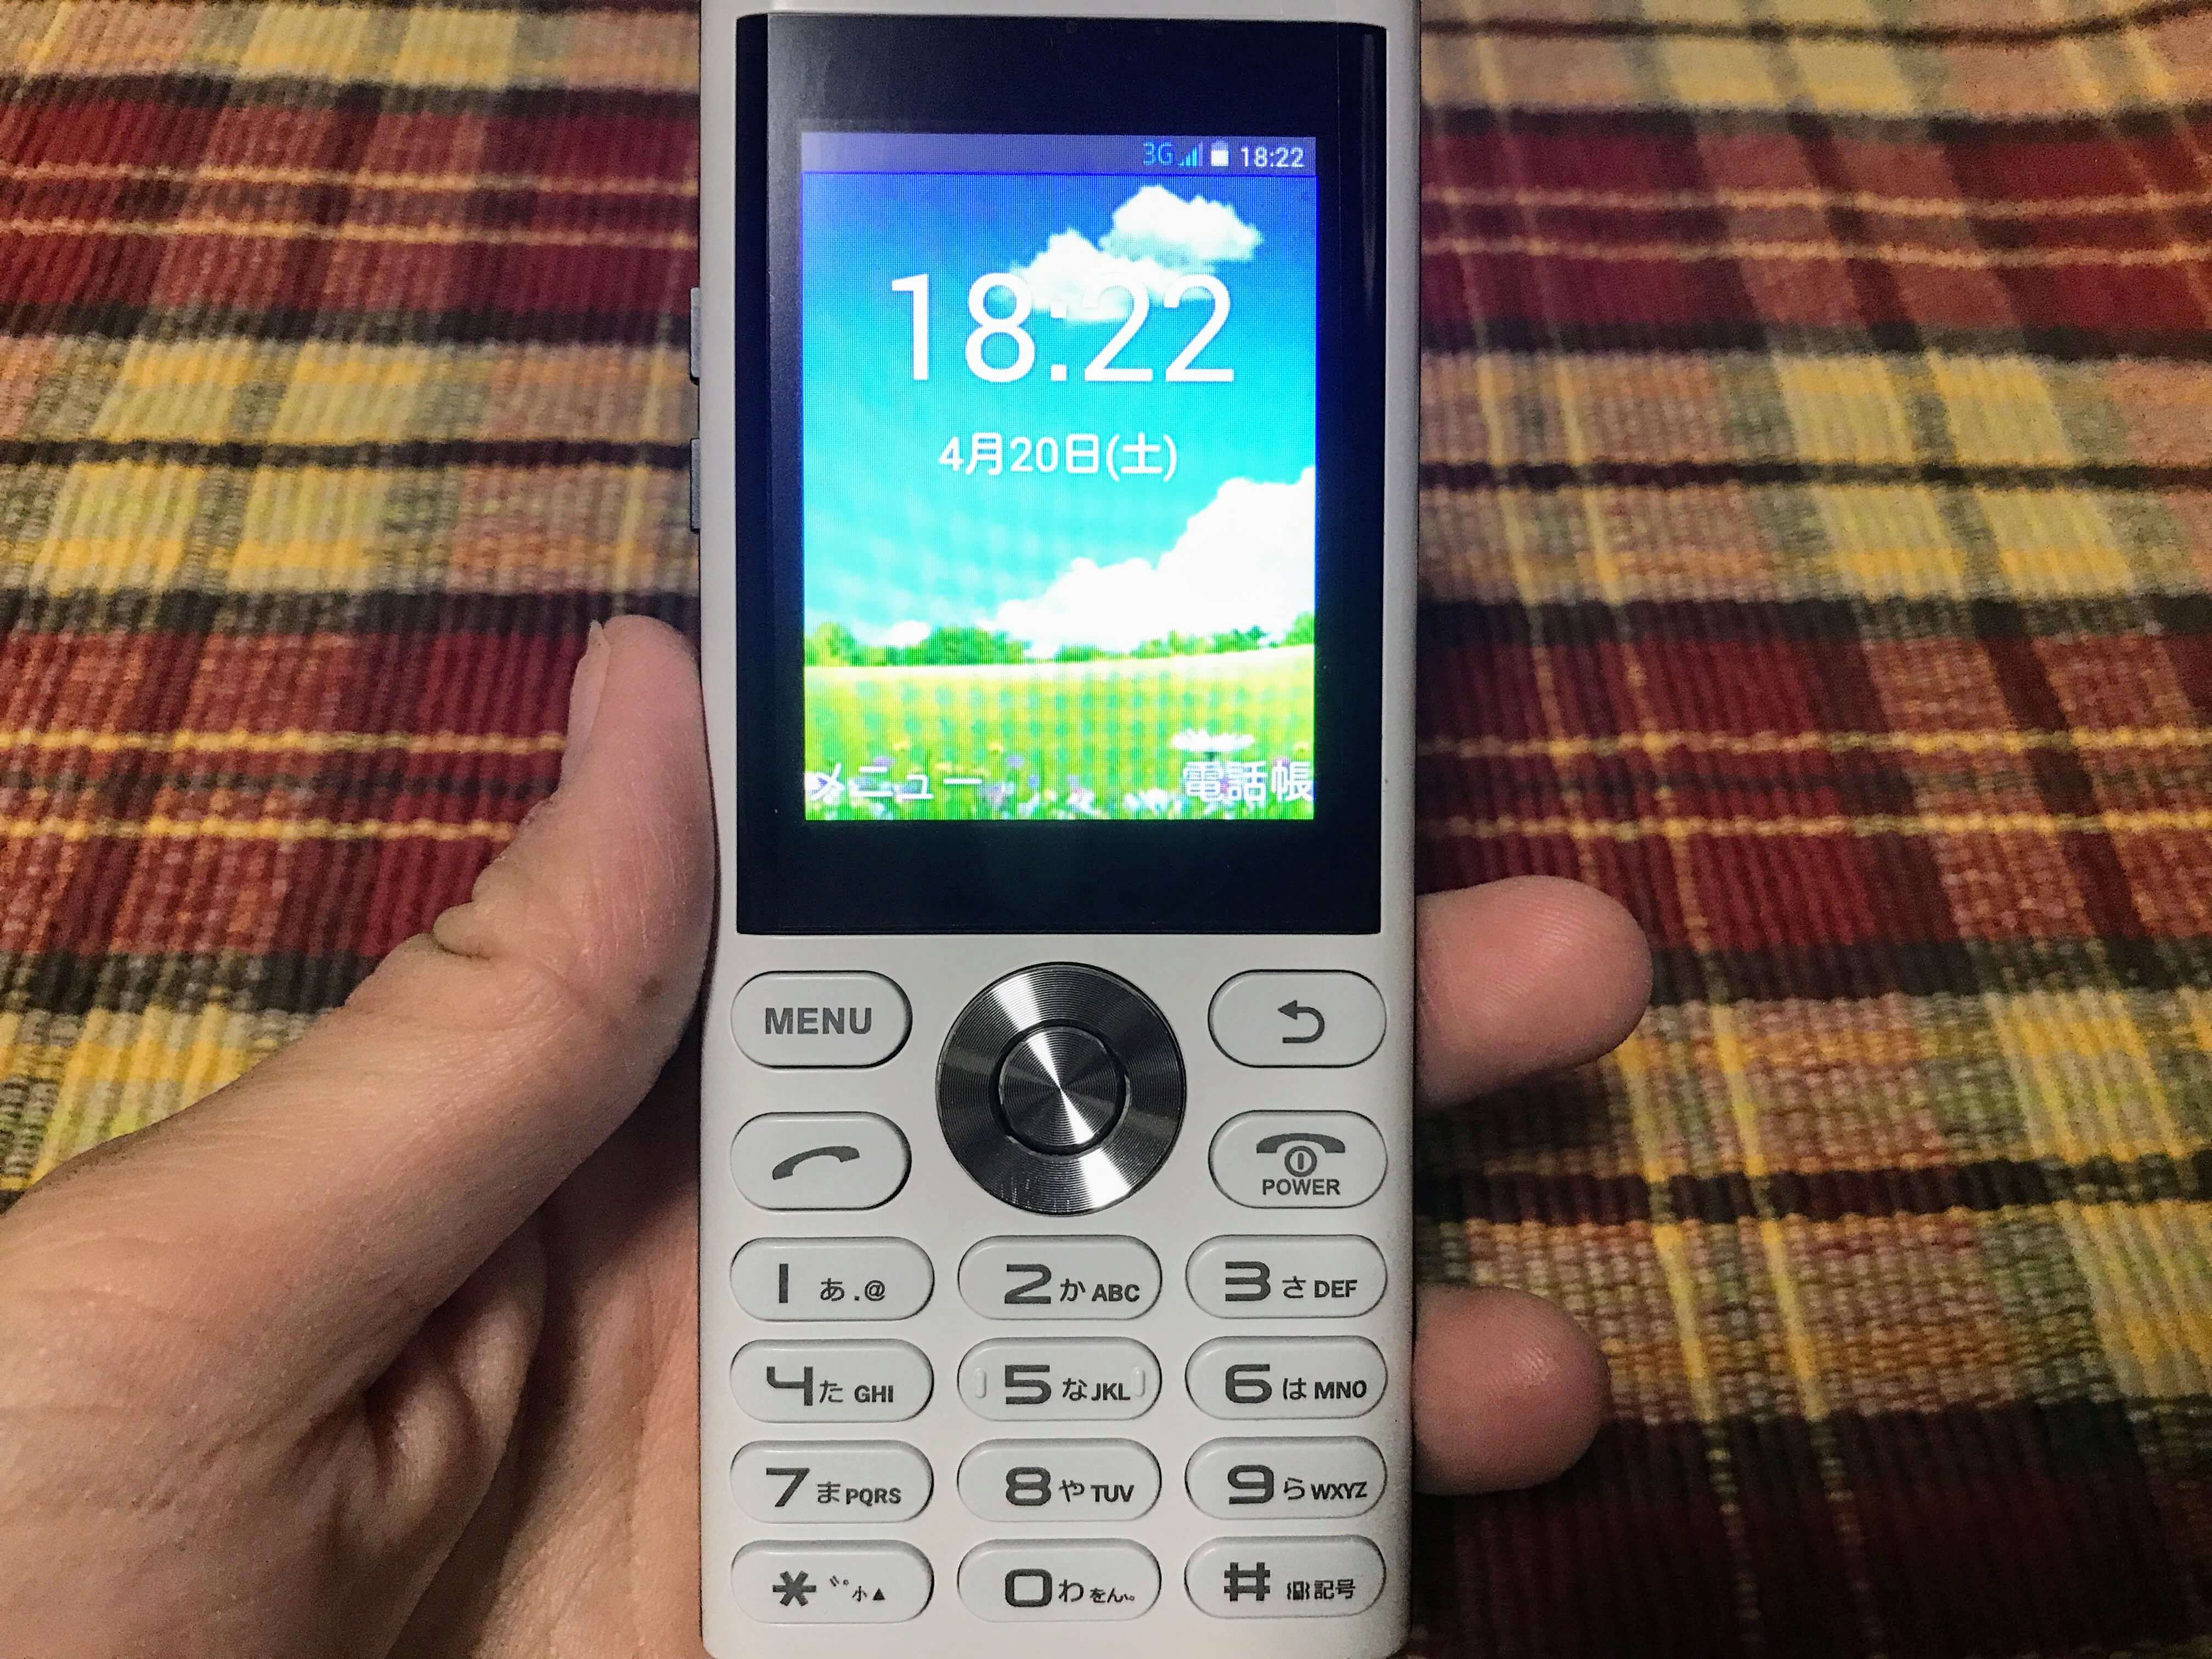 Simフリーのストレート携帯 Un Mode Phone01 ファーストインプレッション